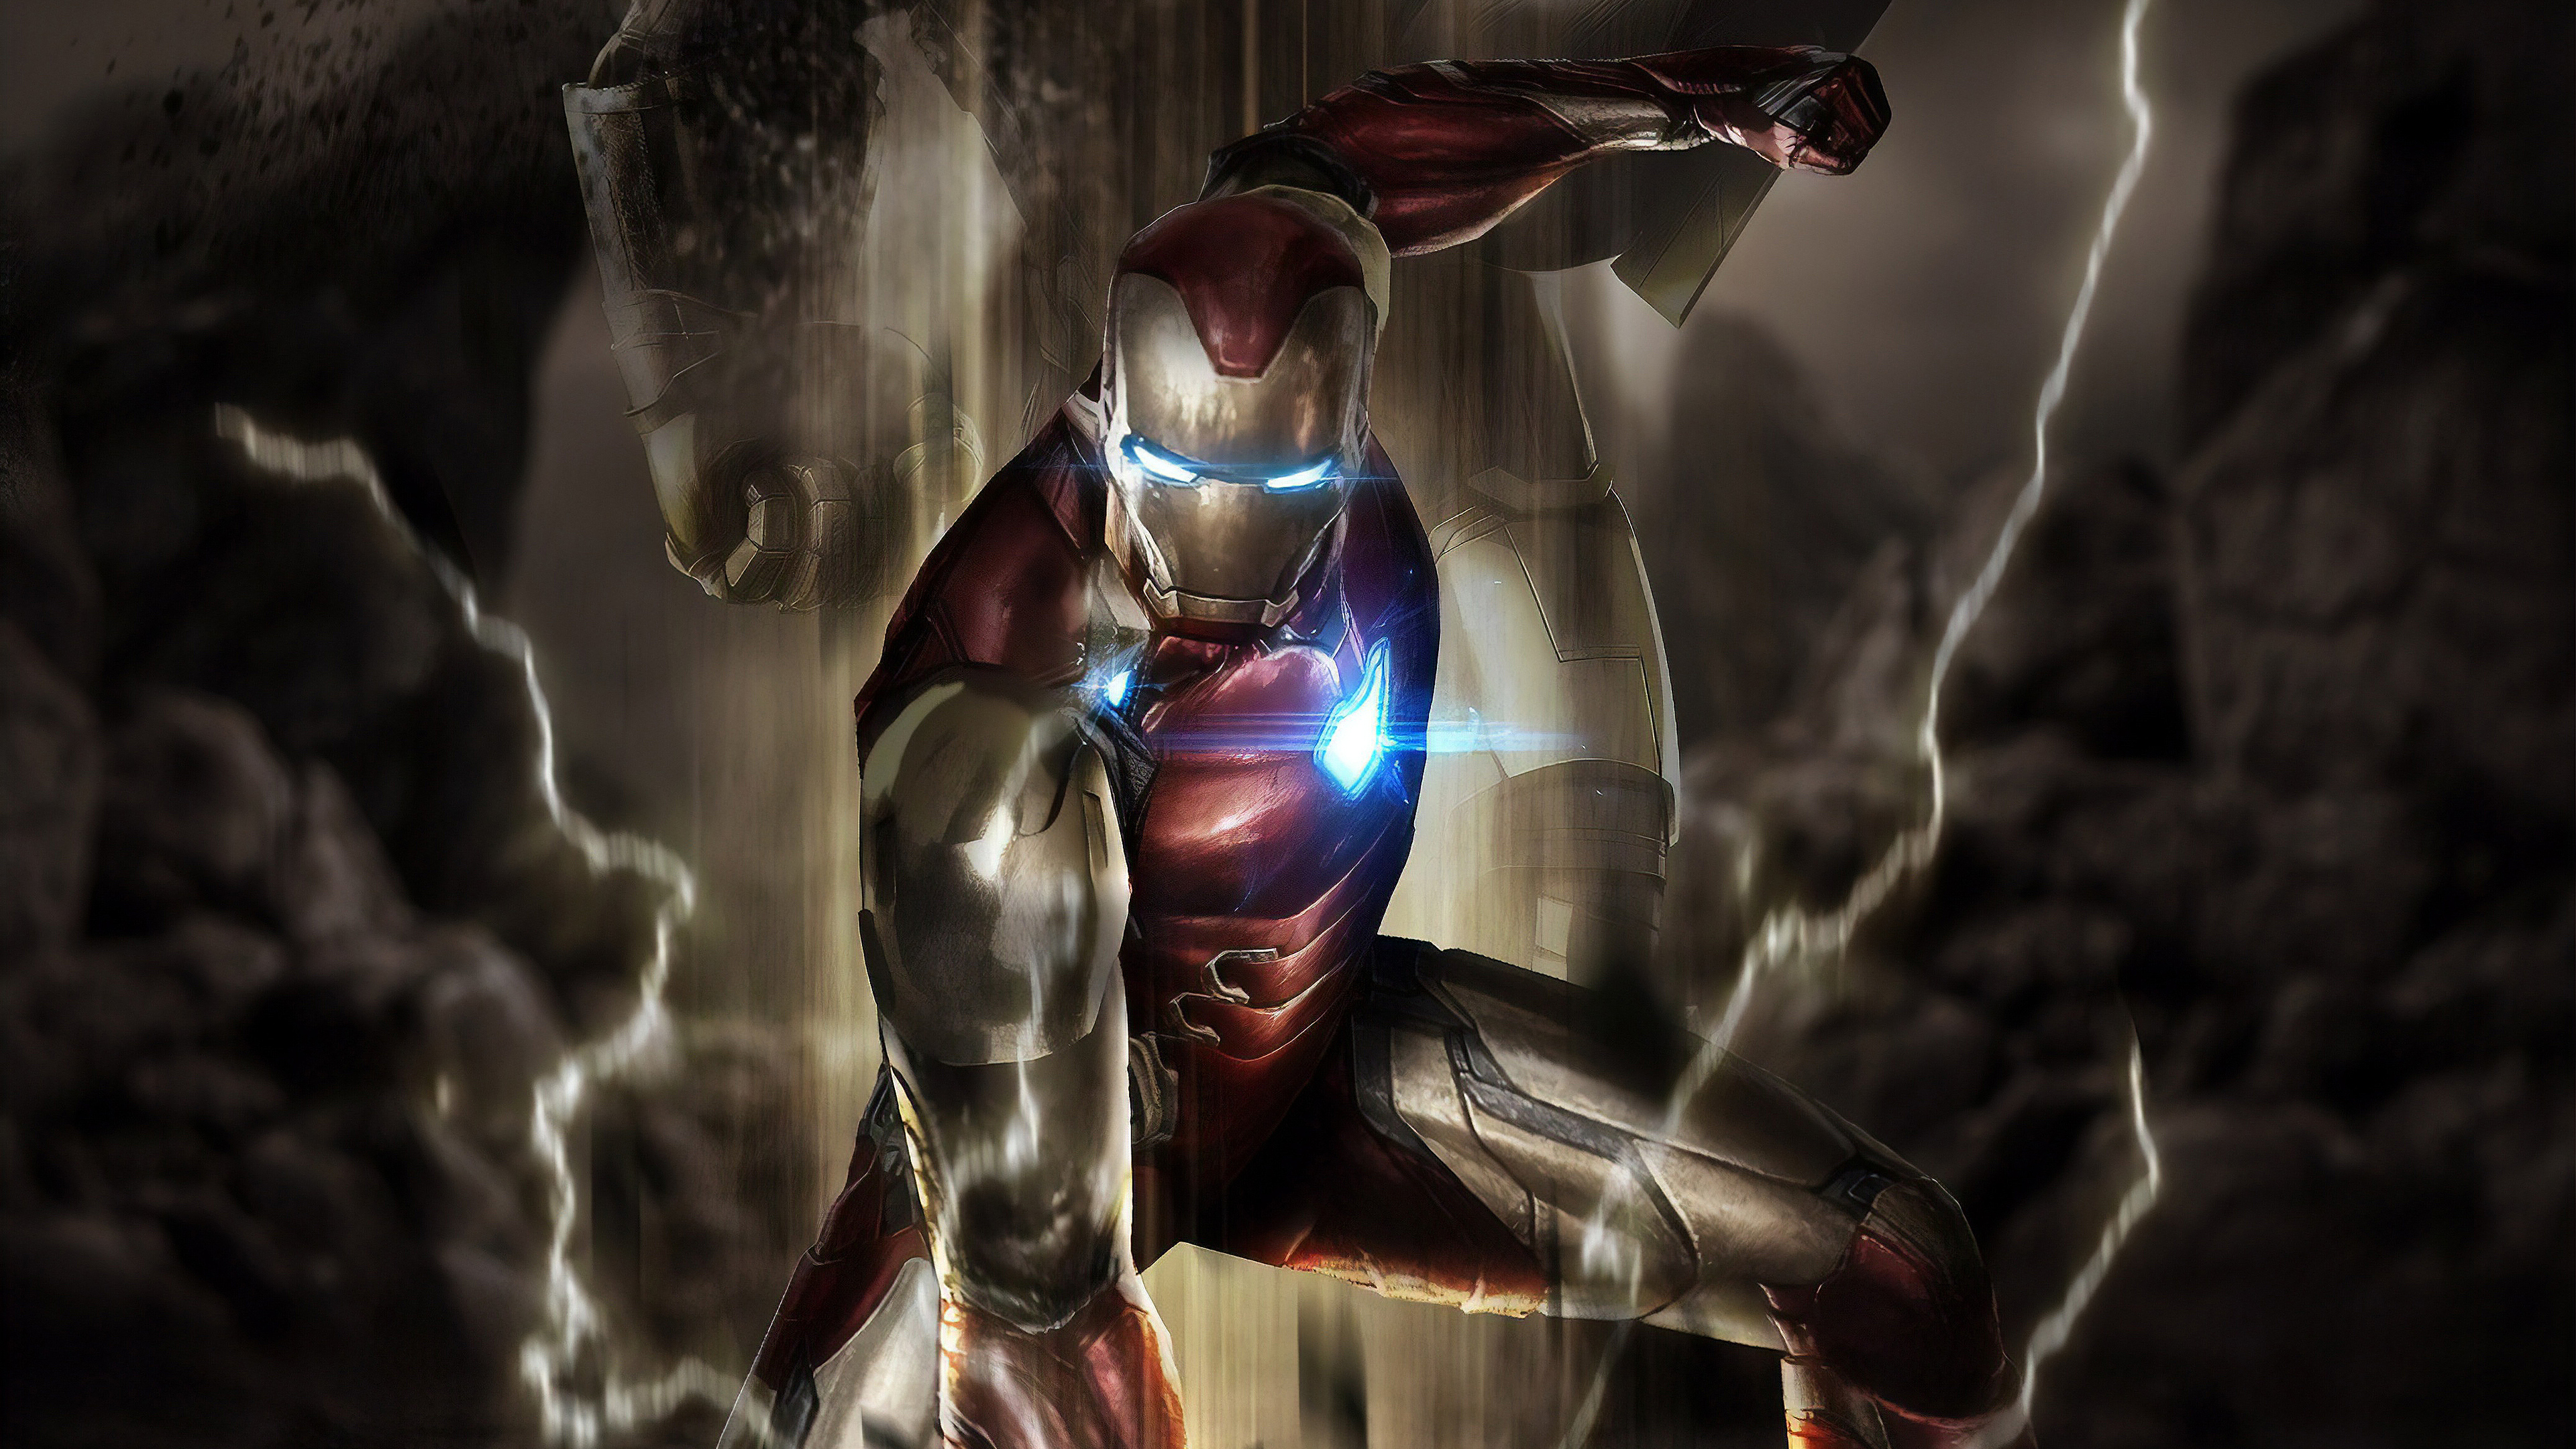 Iron Man Avengers Endgame Movie superheroes wallpapers ...